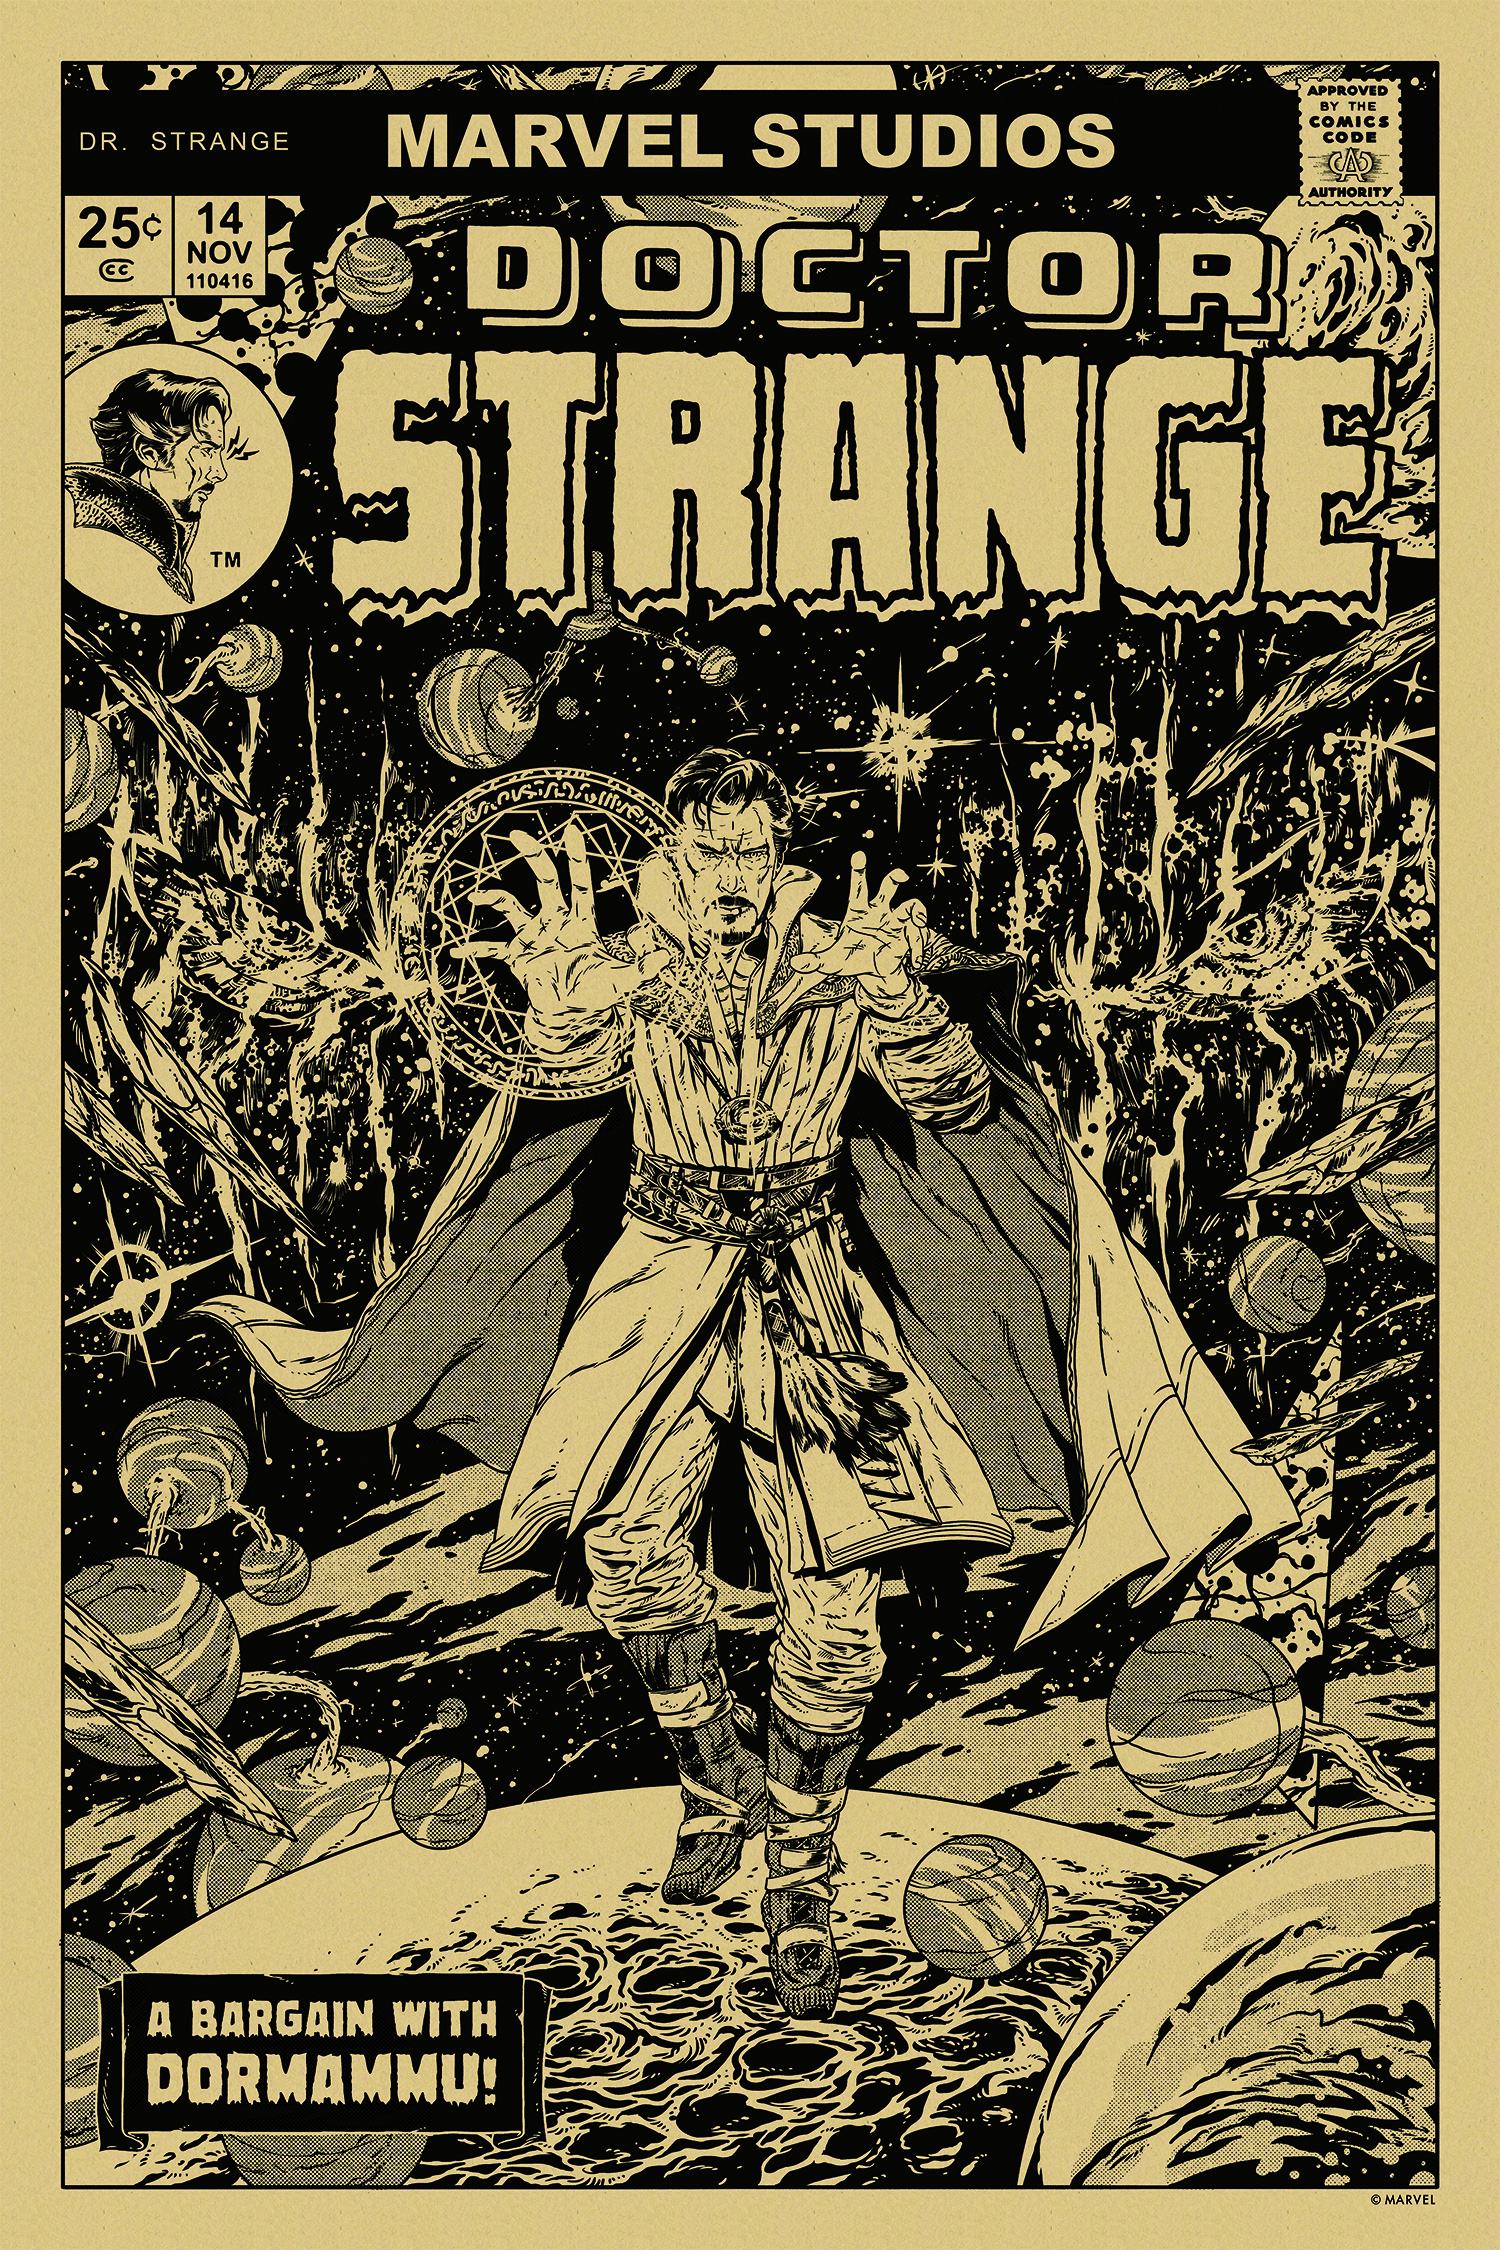 Doctor Strange by Dombrowski (Variant)